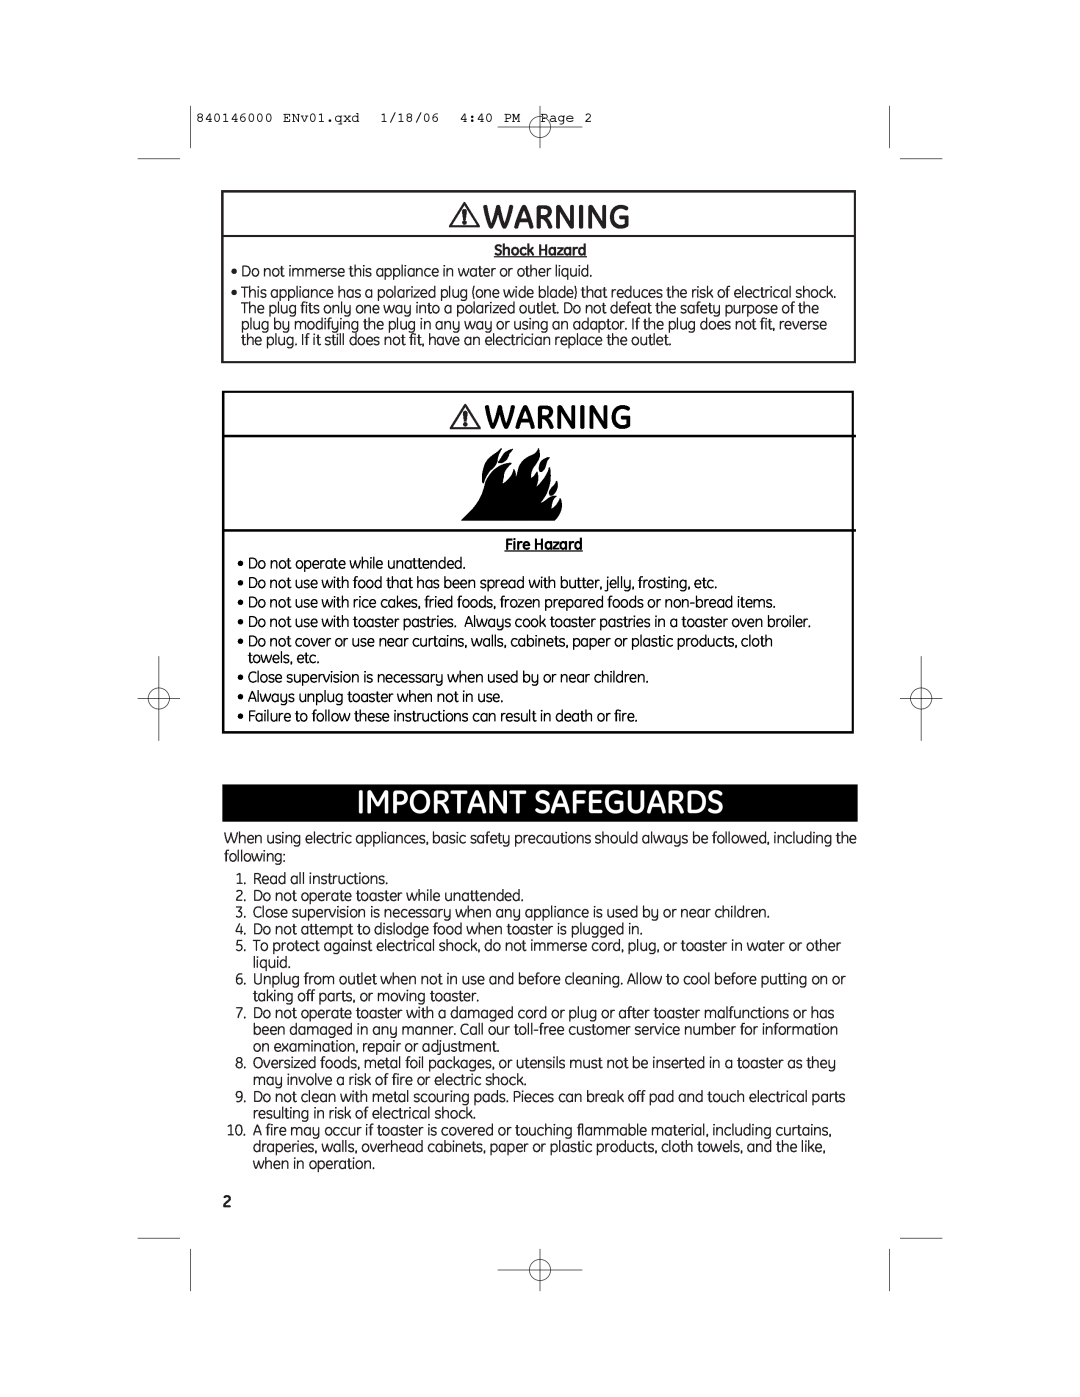 GE 840146000, 169002 manual Important Safeguards, Shock Hazard, Fire Hazard 